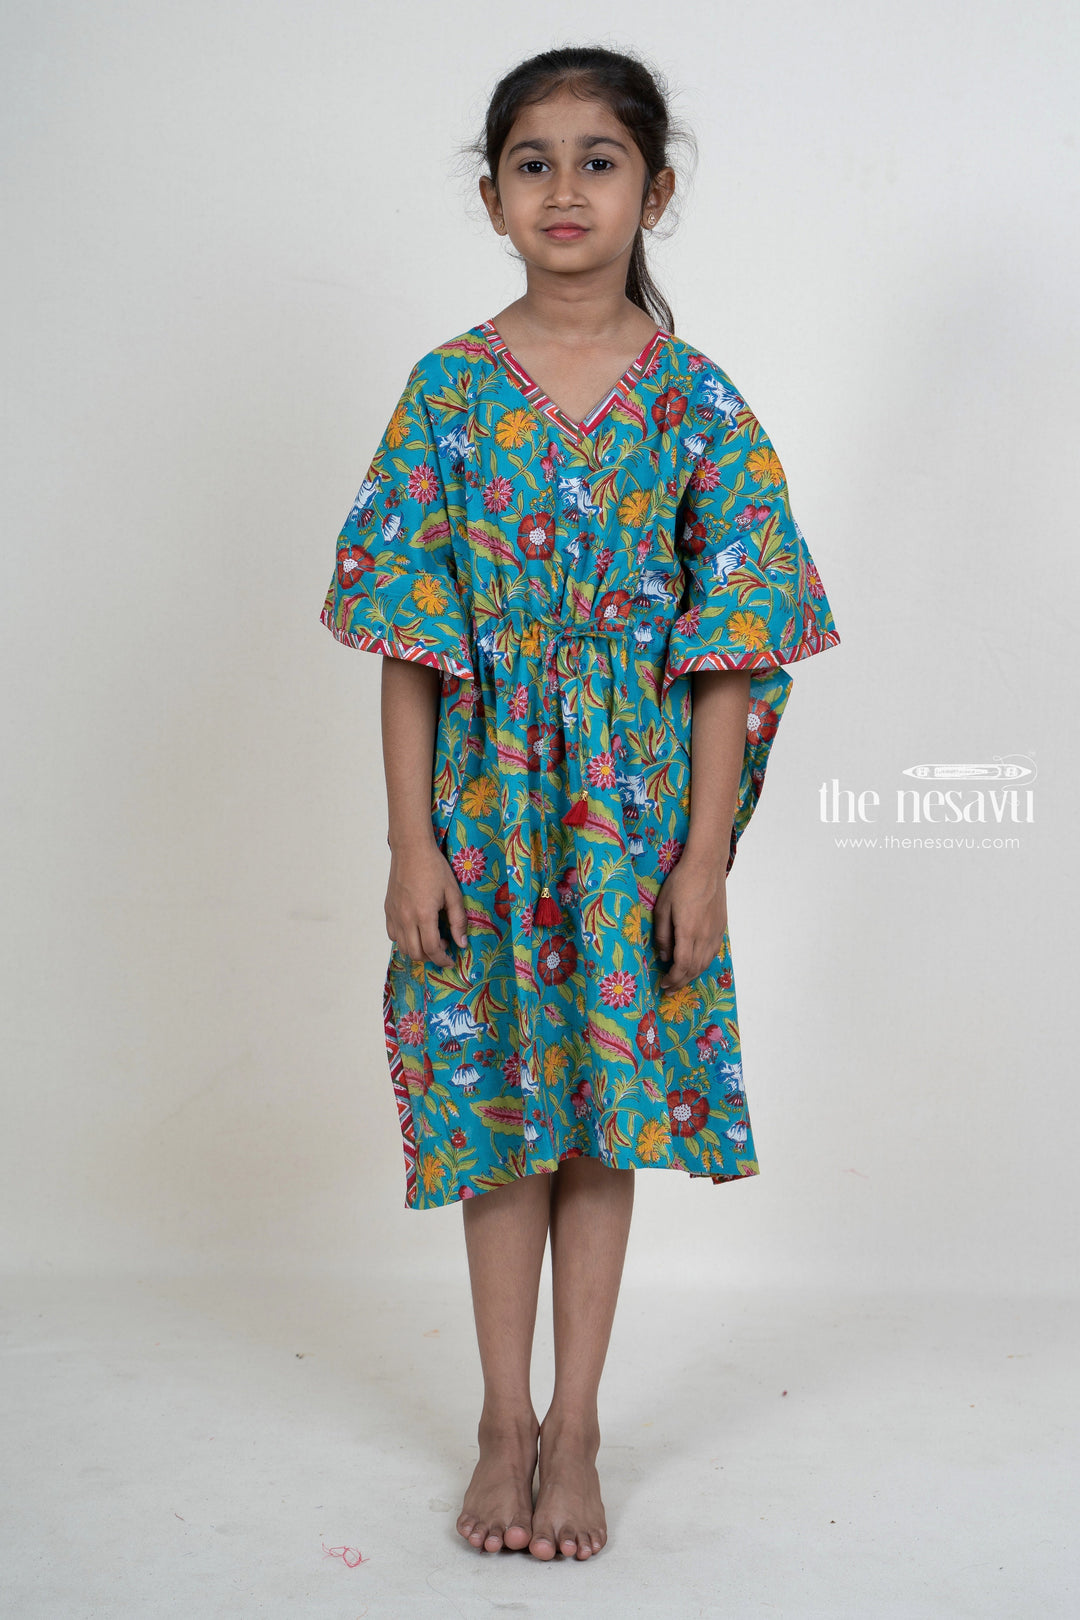 The Nesavu Frocks & Dresses Soft Jaipuri Cotton Kaftan Dresses For Kid Girls psr silks Nesavu 14 (6M) / Turquoise GFC929